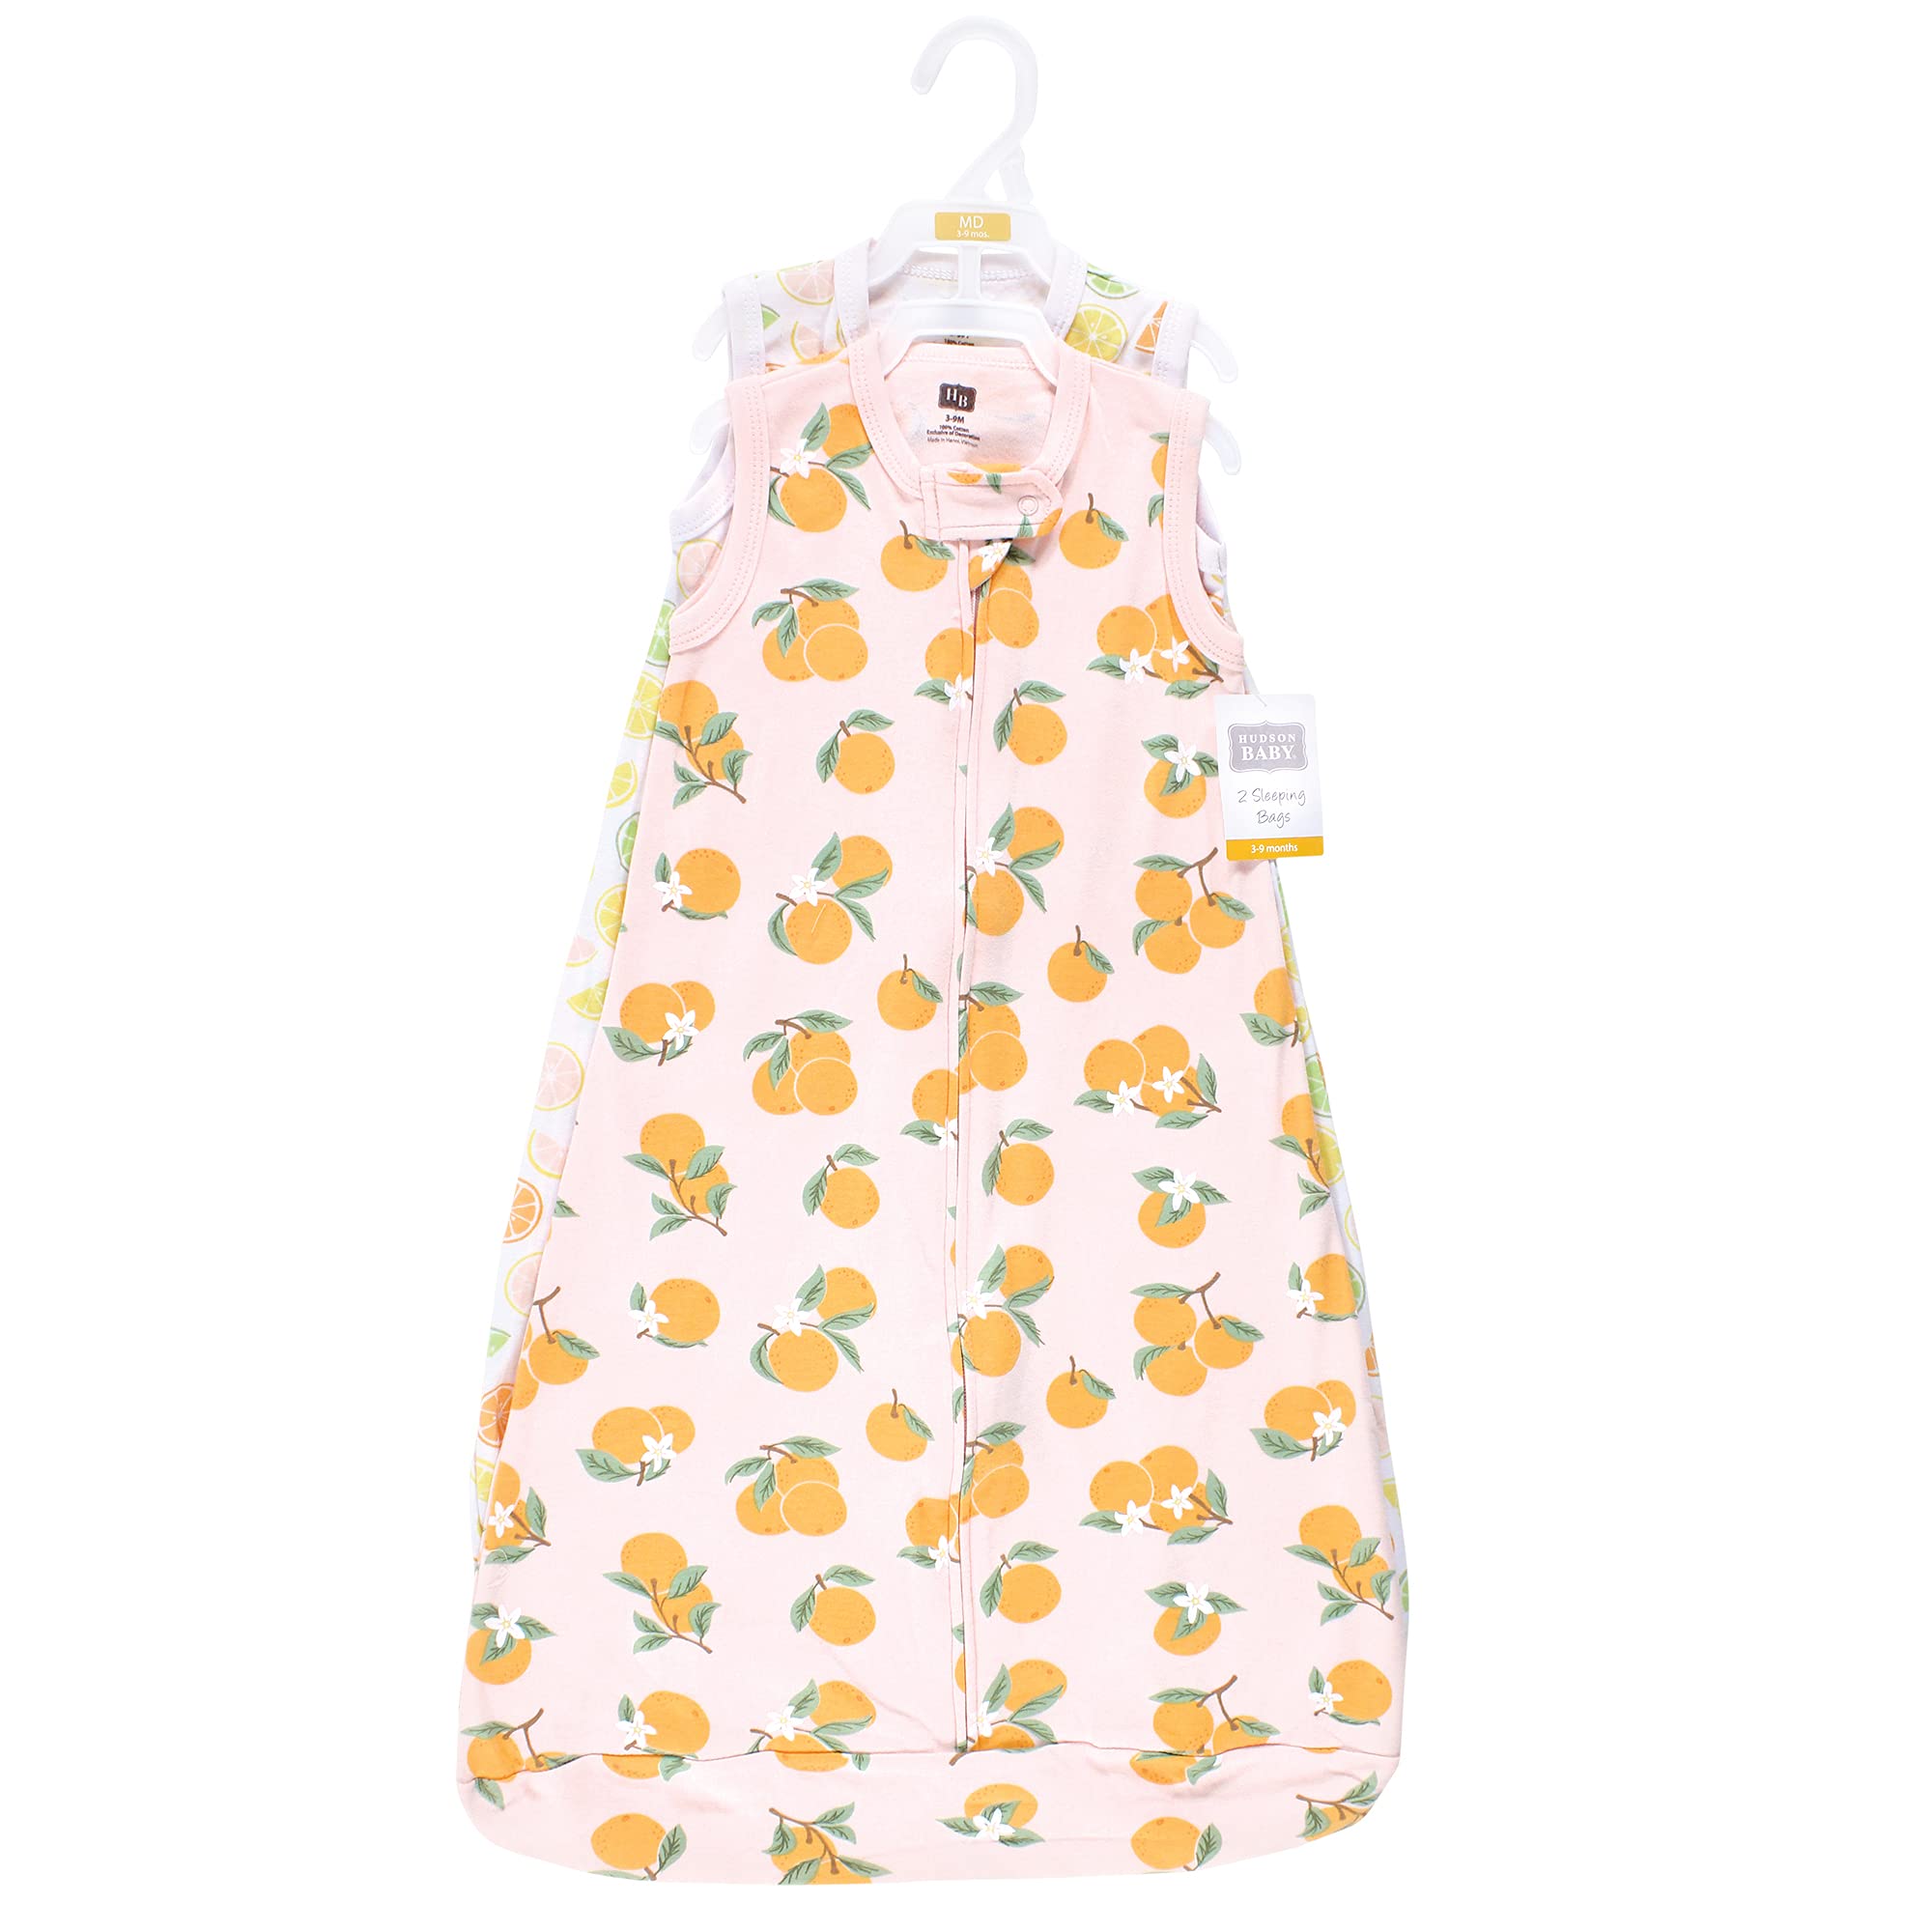 Hudson Baby Unisex Baby Interlock Cotton Sleeveless Sleeping Bag, Citrus Orange, 12-18 Months